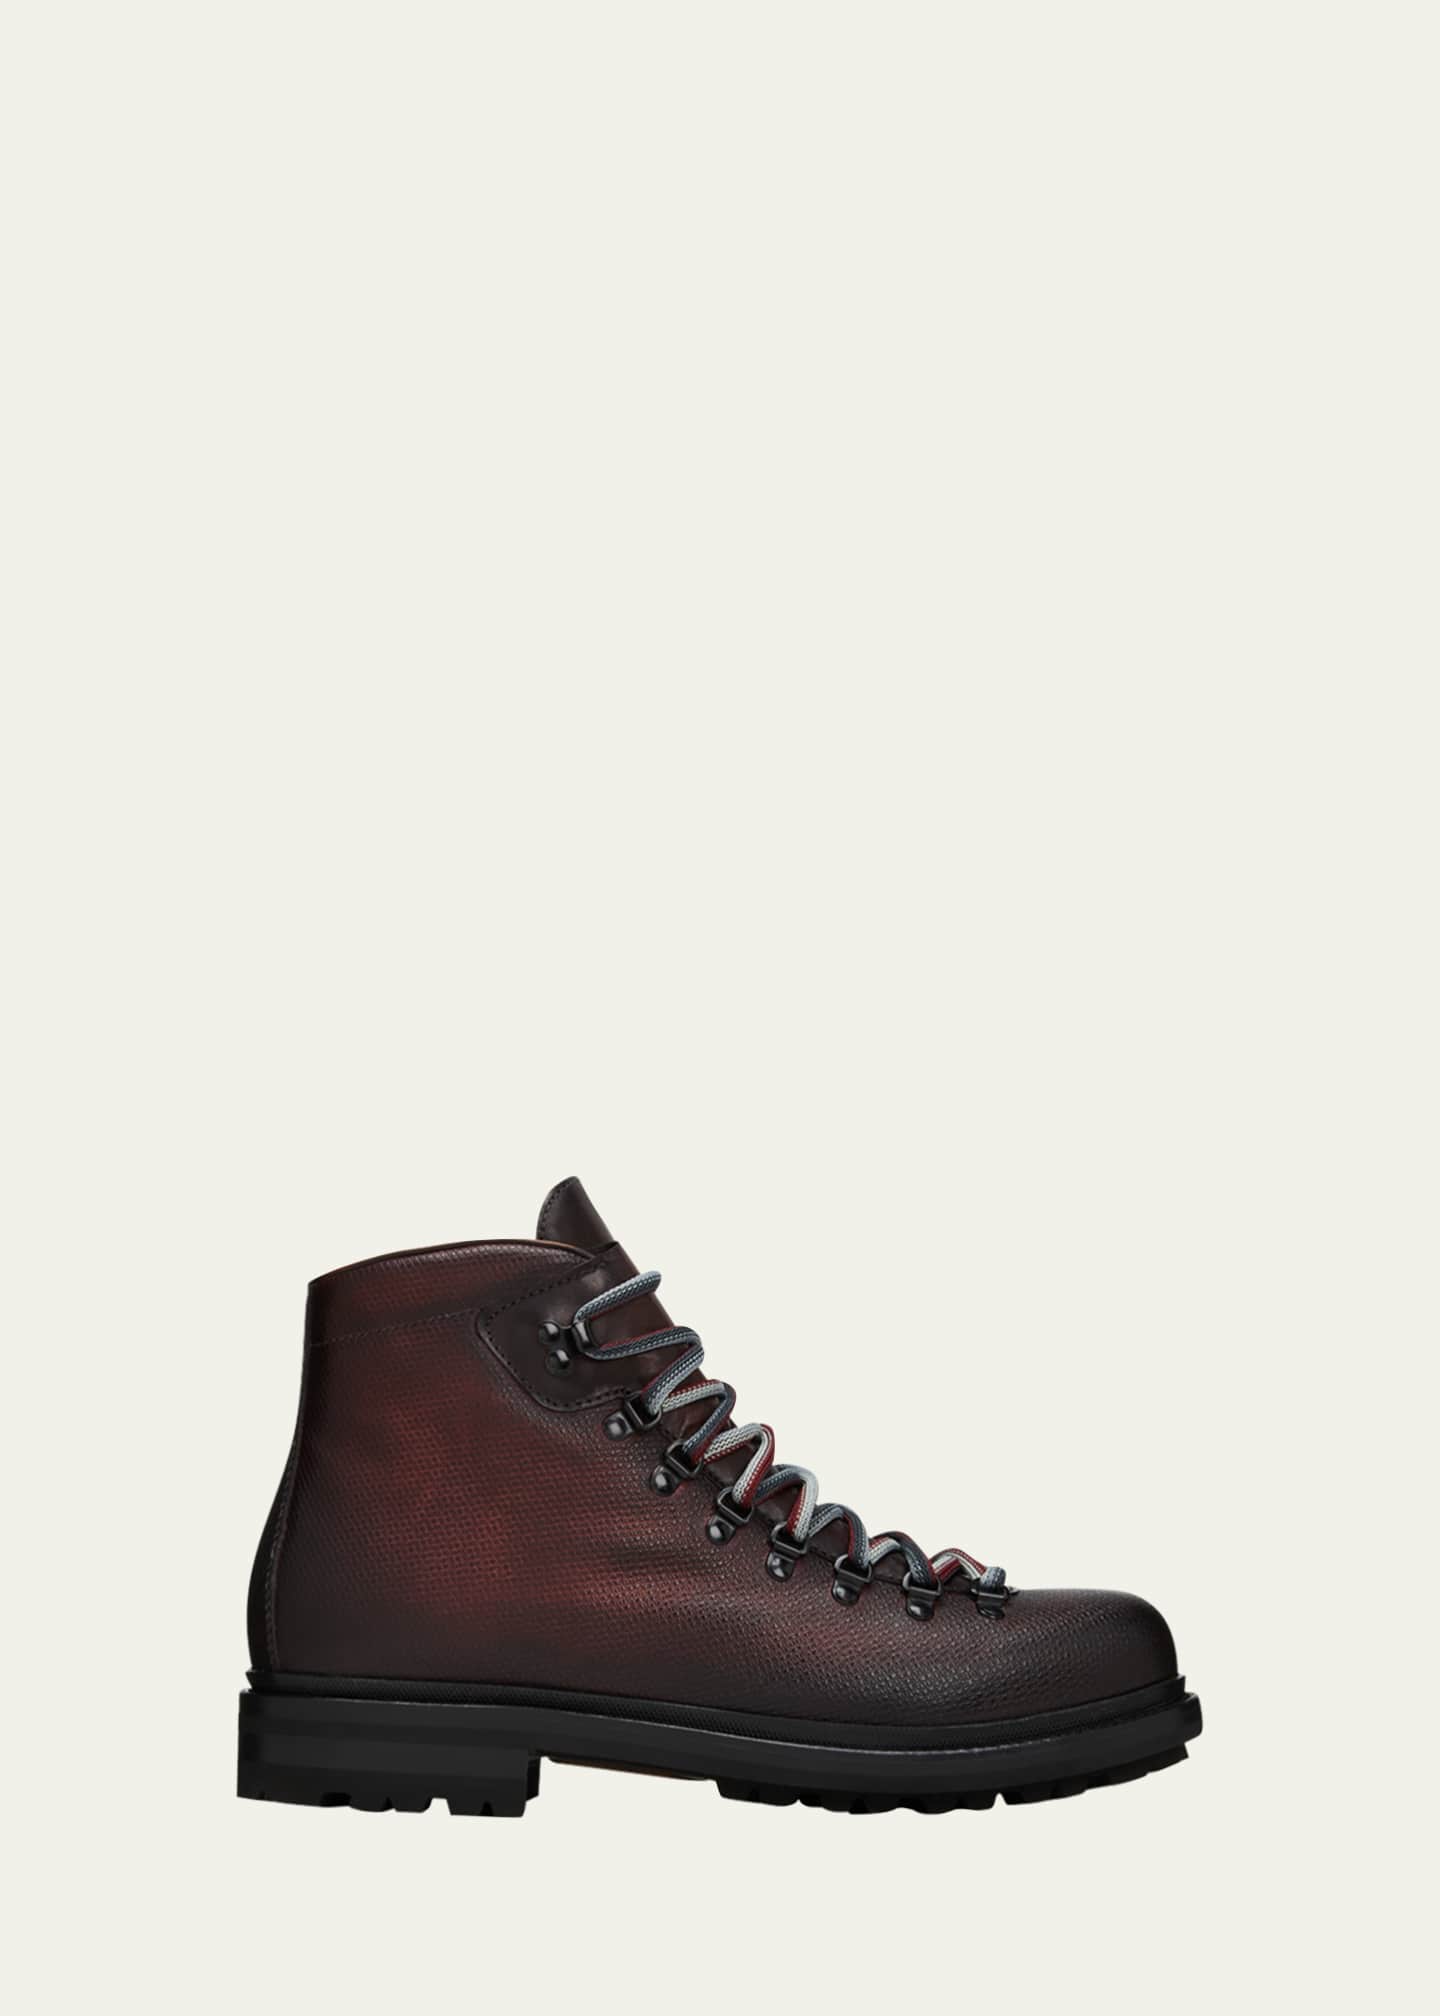 Fontan Leather Hiking Boots - Goodman